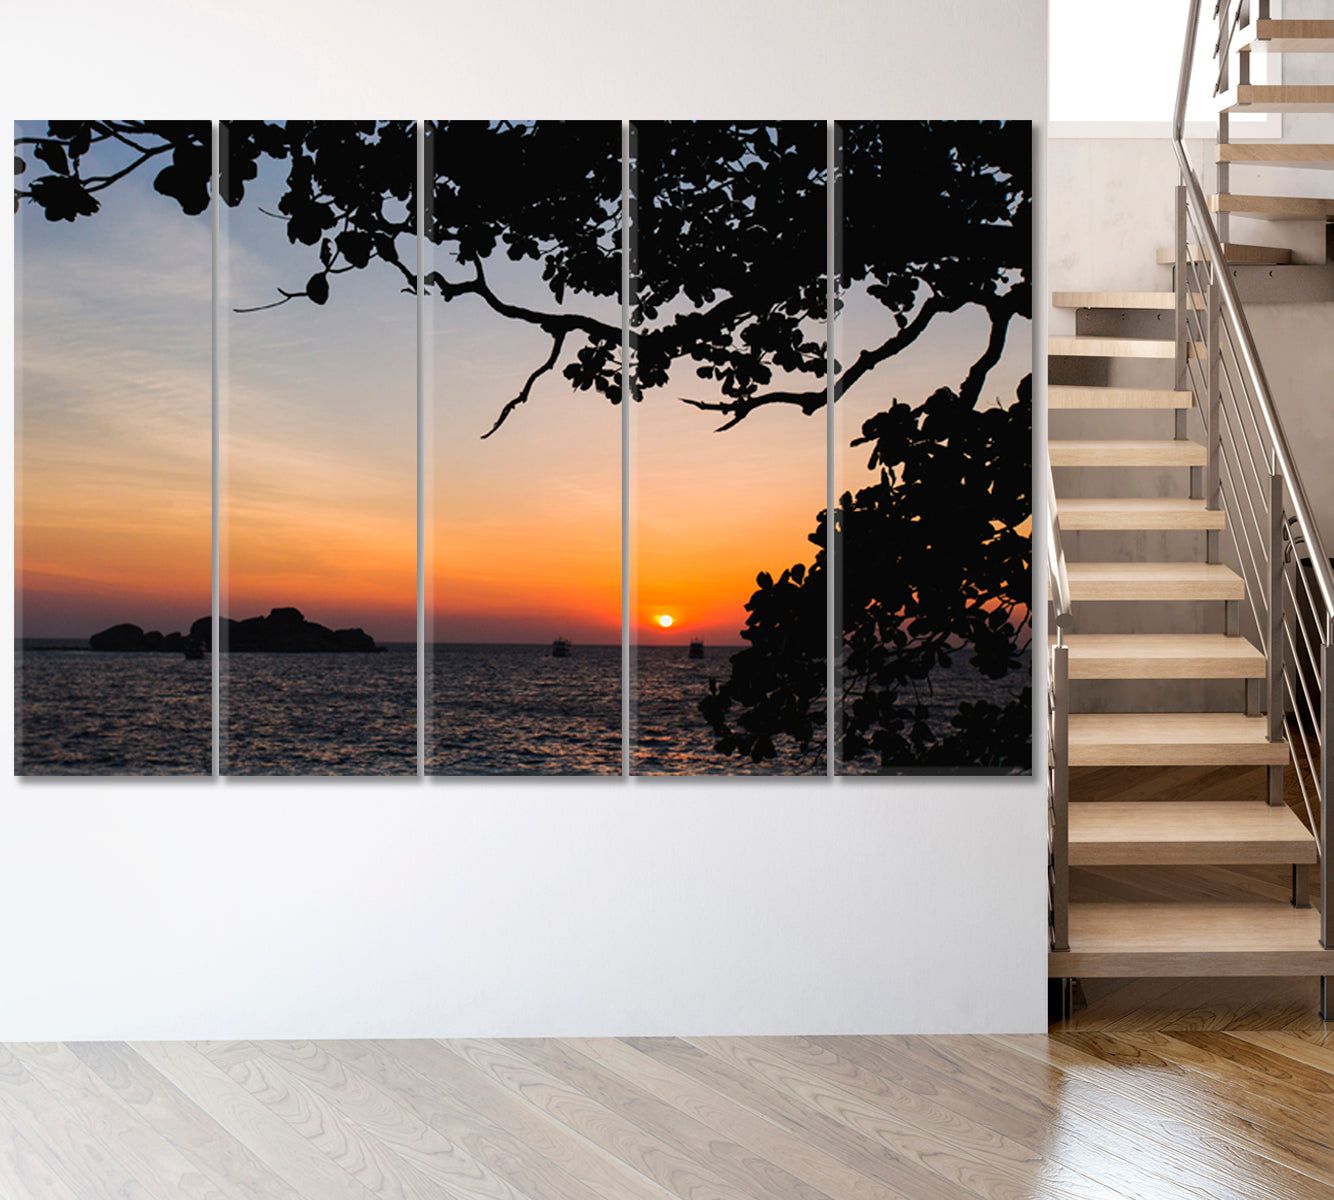 Bright Red Sunset Tropical Island Coast in Indian Ocean Landscape Scenery Landscape Fine Art Print Artesty 5 panels 36" x 24" 